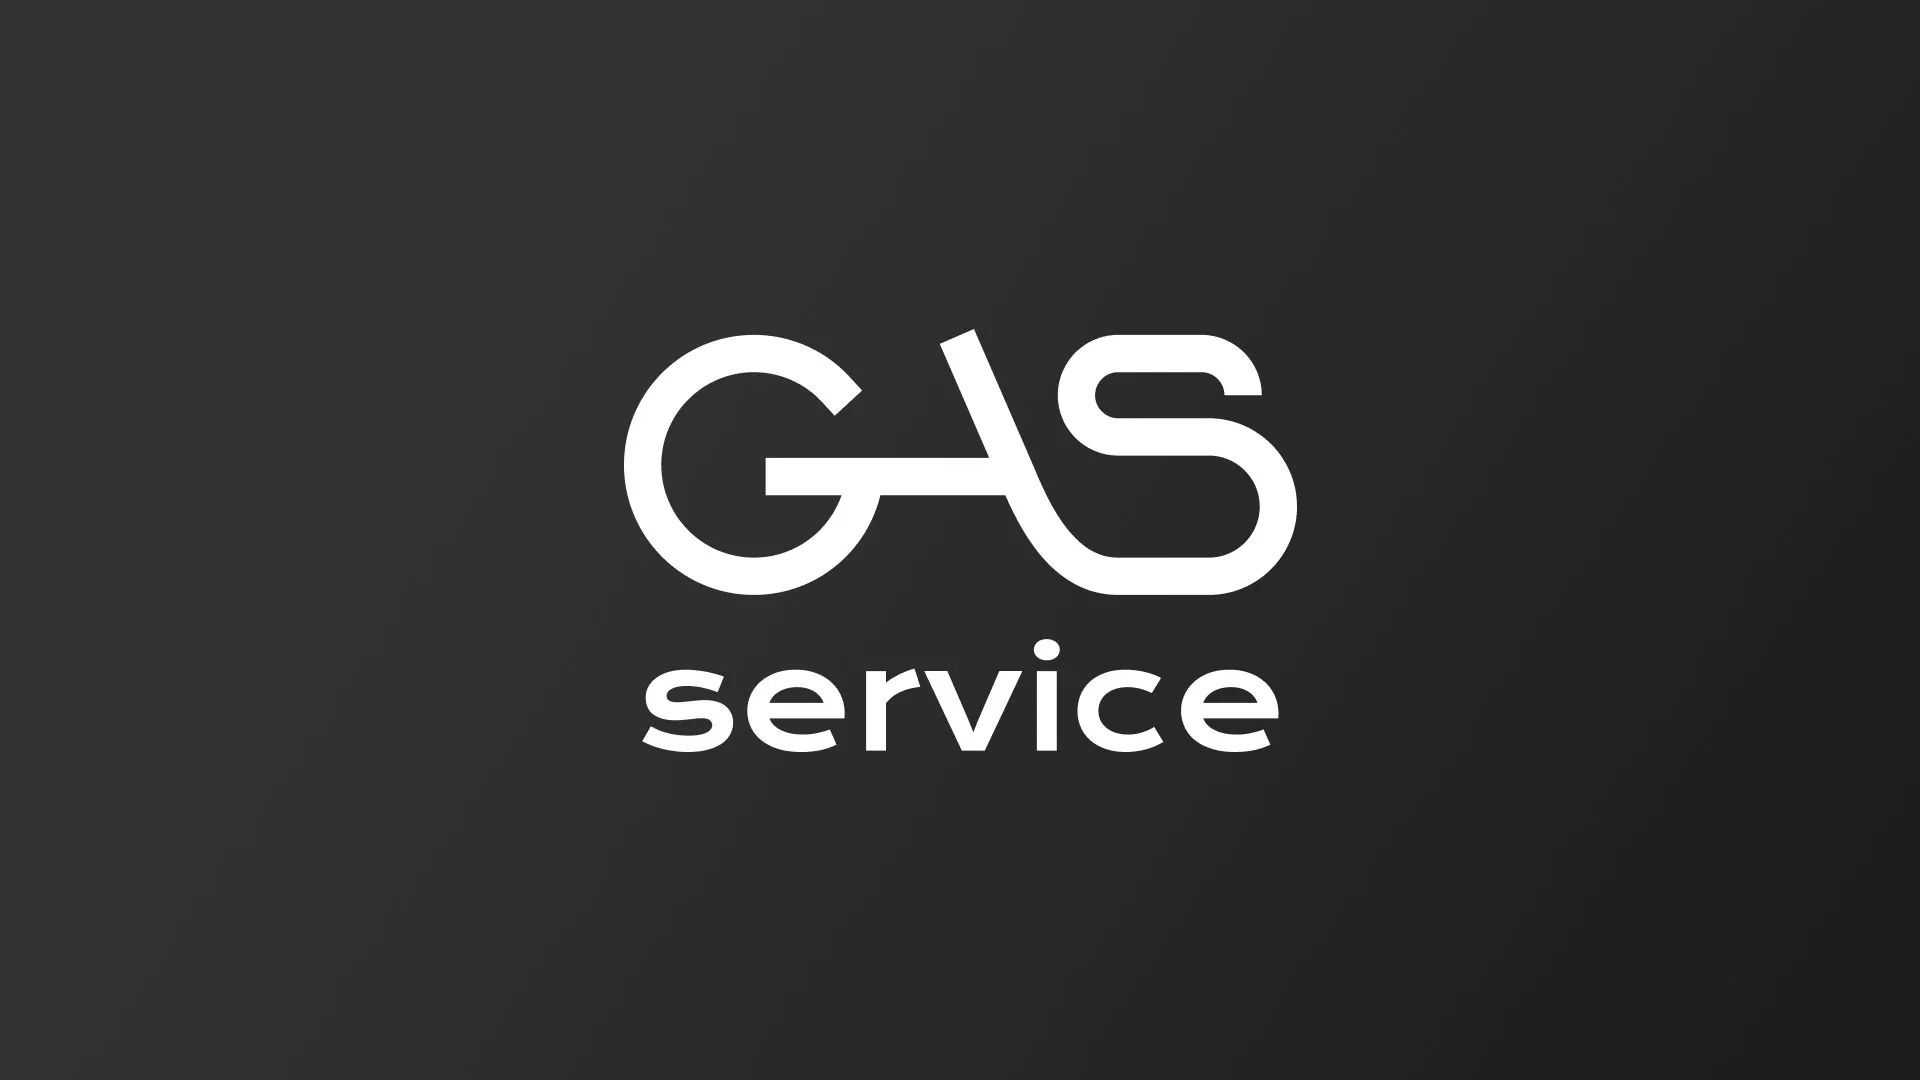 Разработка логотипа компании «Сервис газ» в Болгаре